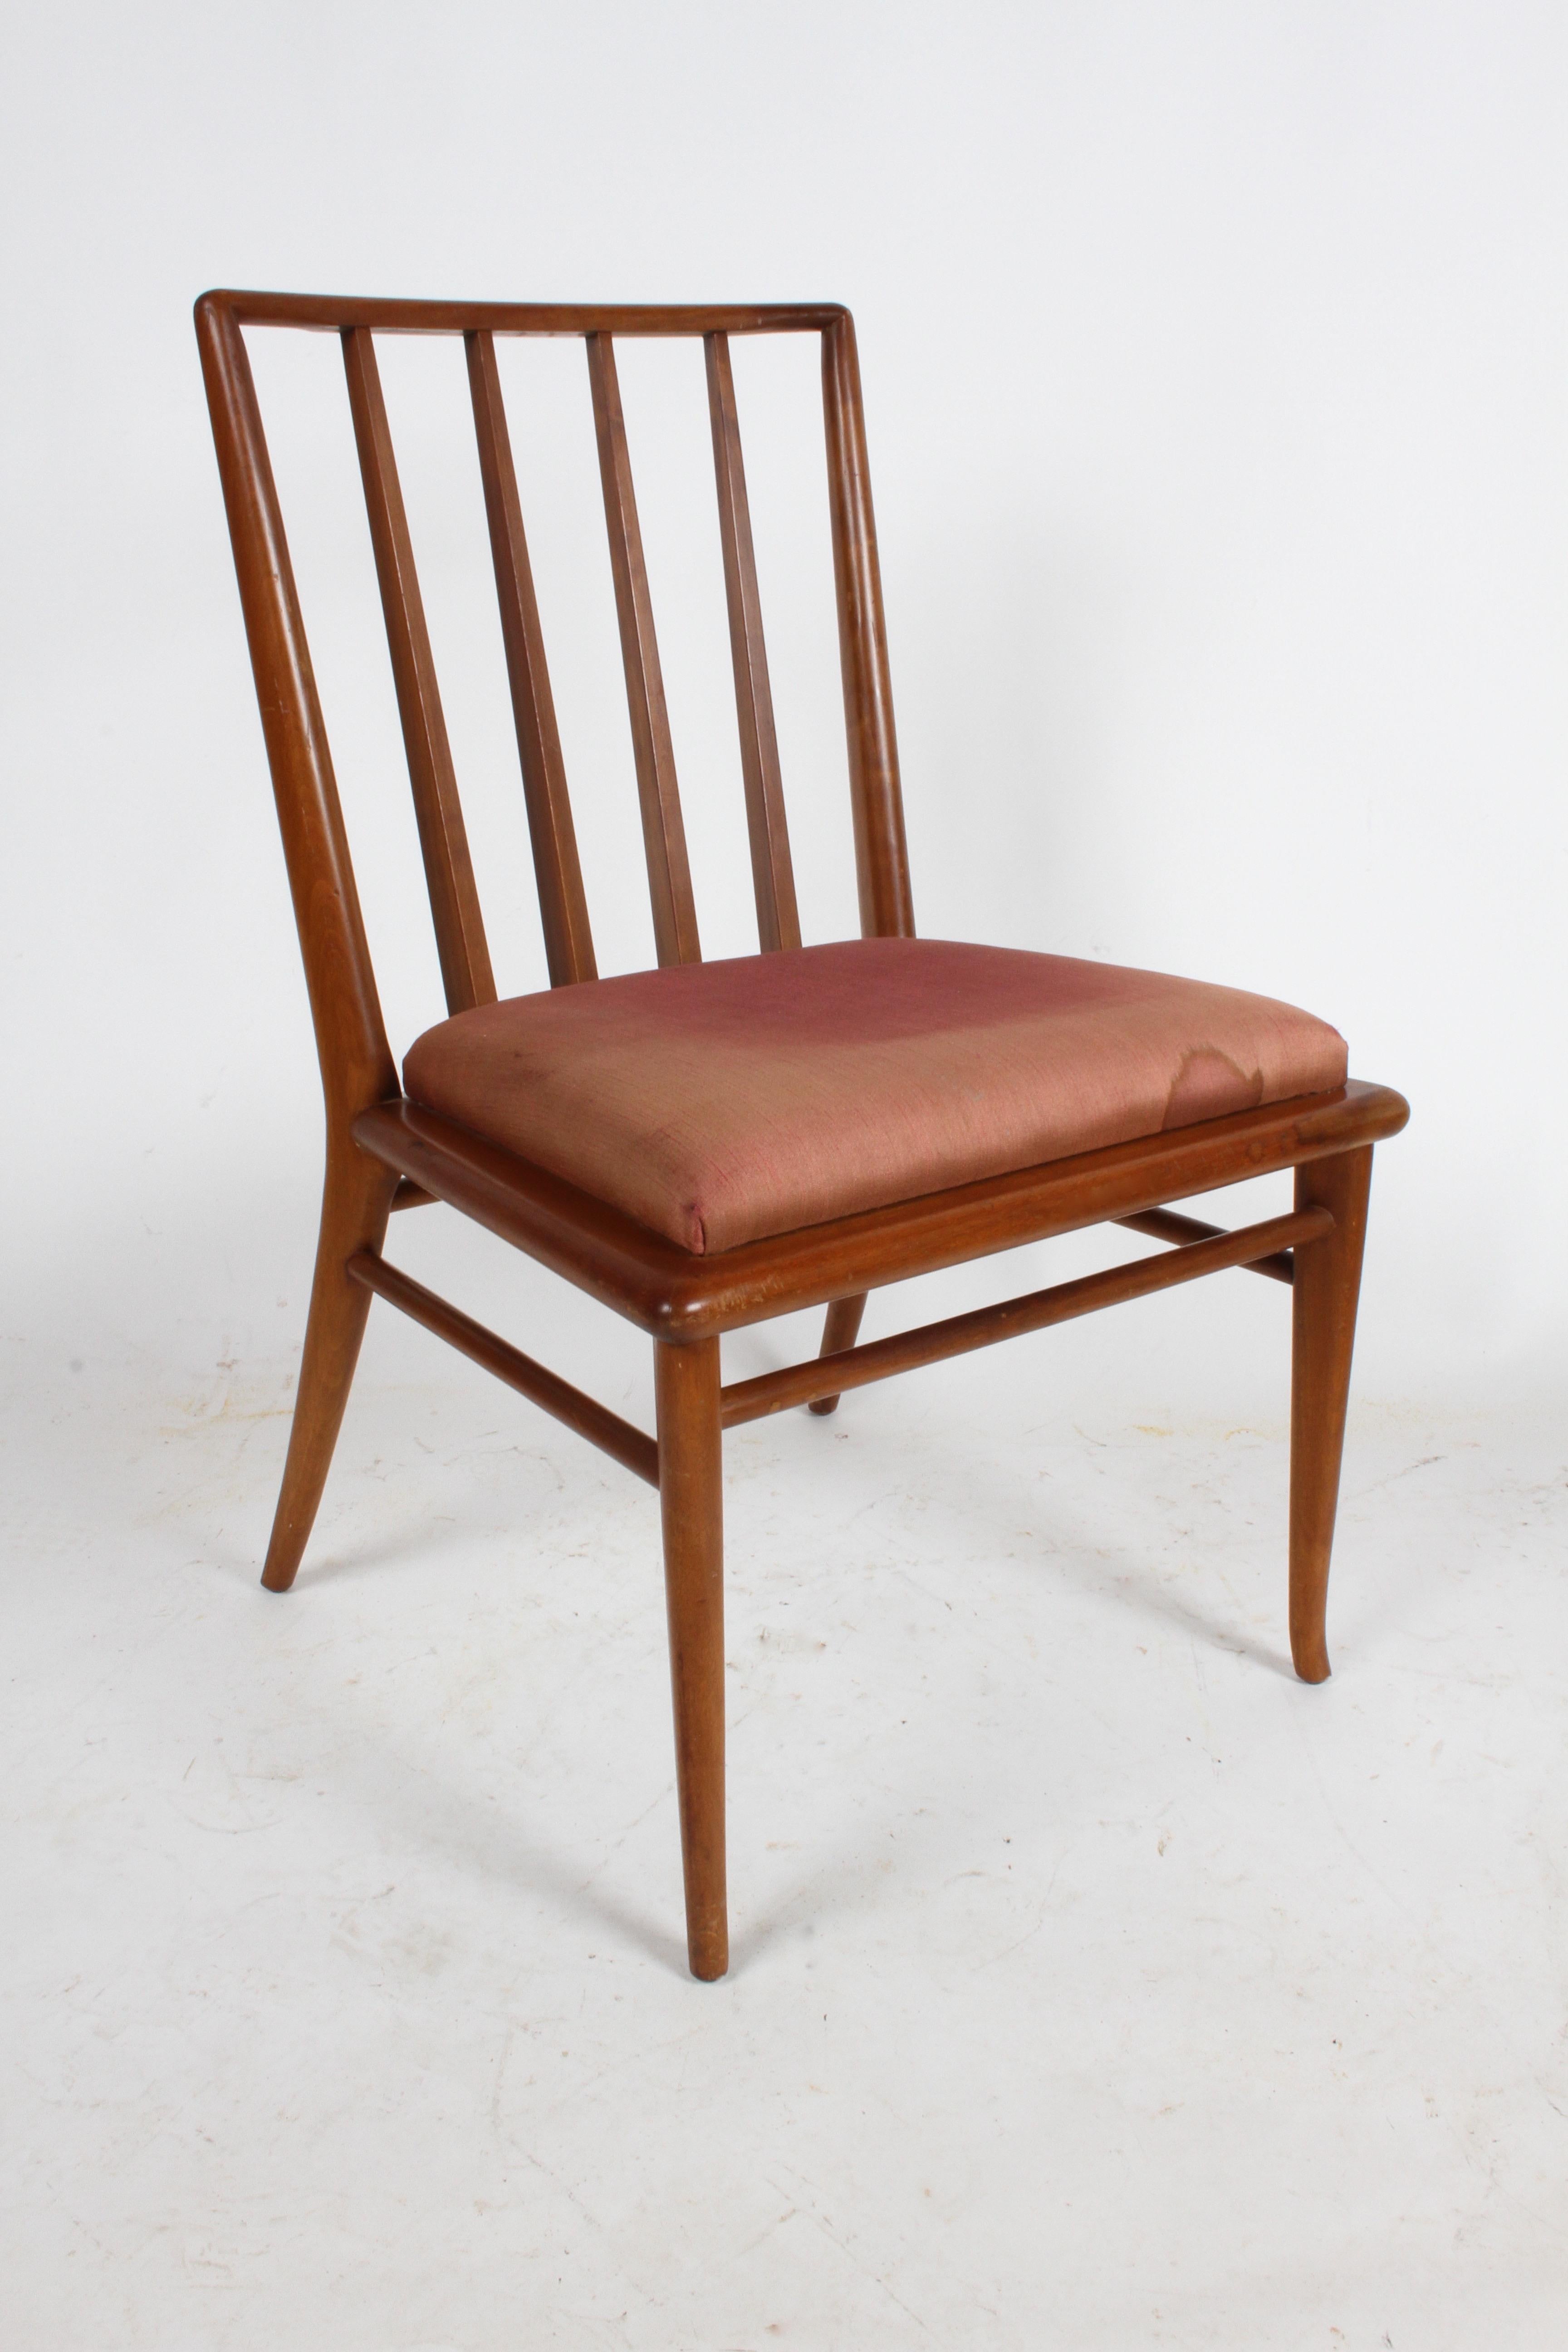 Mid-20th Century T.H. Robsjohn-Gibbings for Widdicomb Dining or Desk Chair For Sale